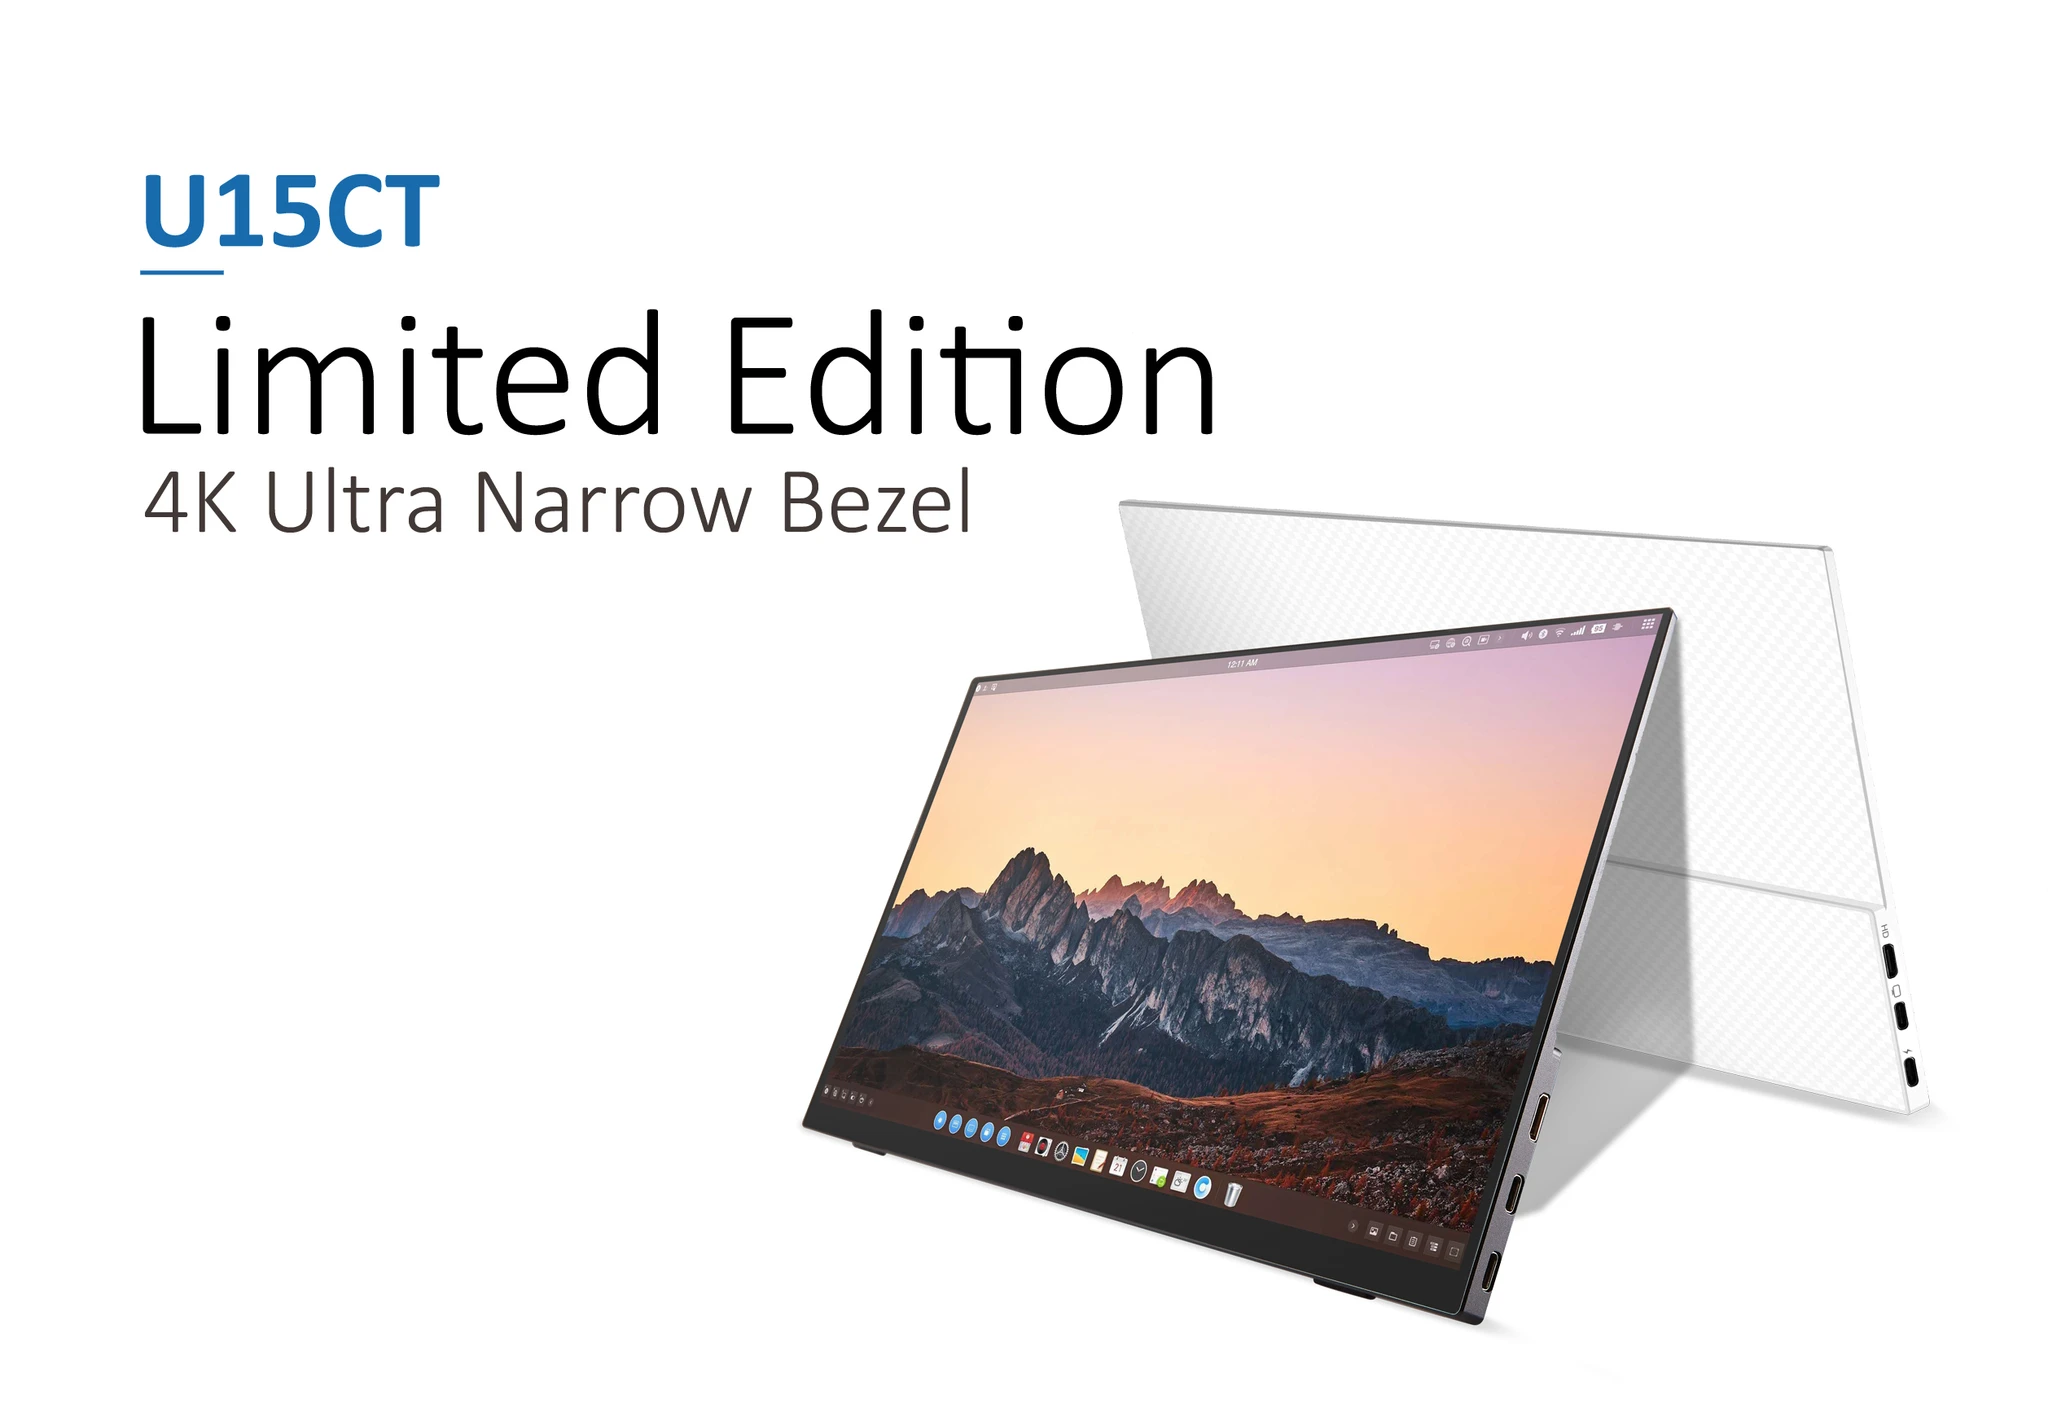 Limited Edition - 4K Ultra Narrow Bezel Compact Monitor